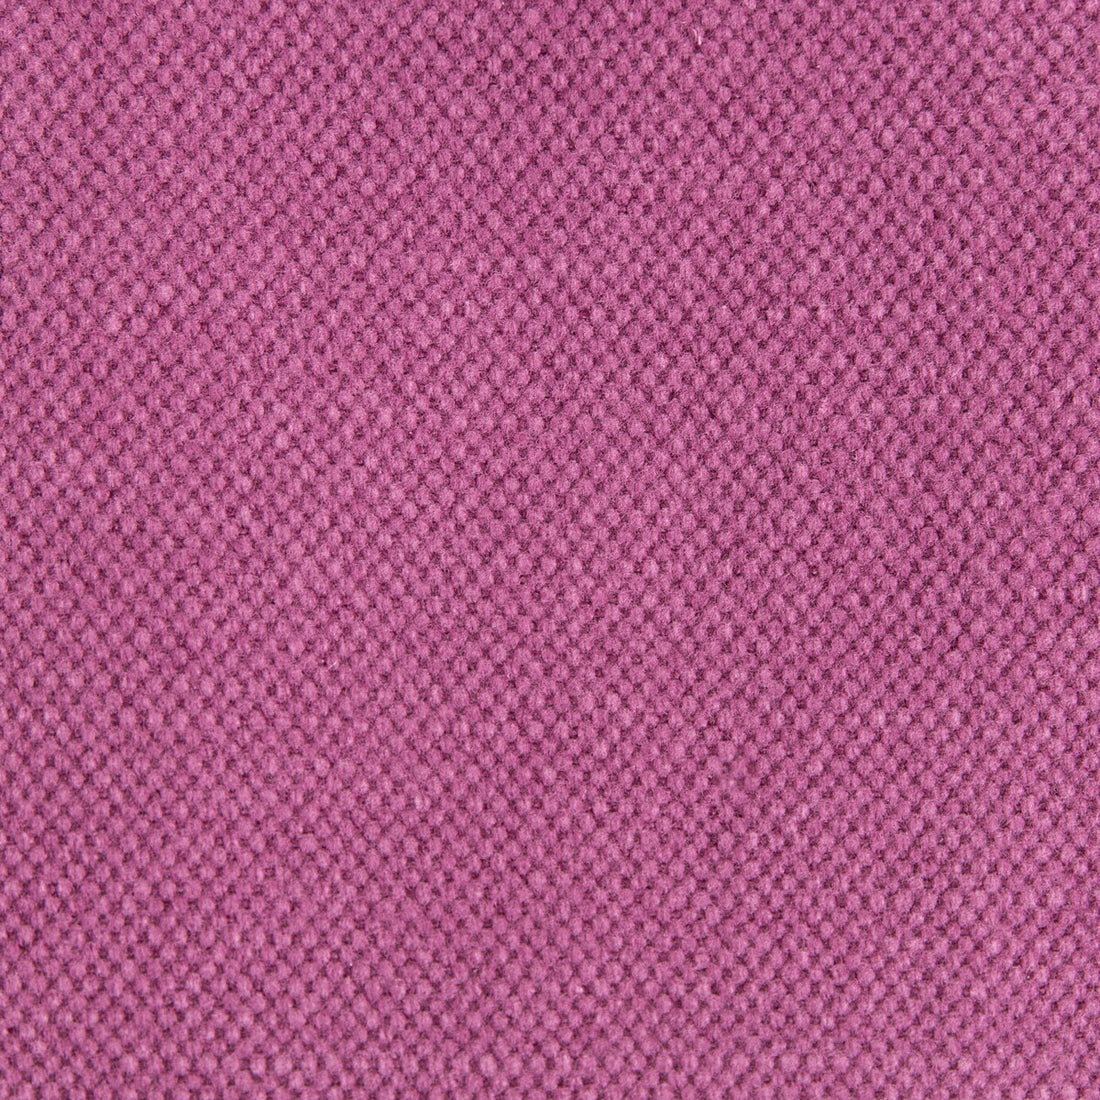 Lima fabric in magenta color - pattern GDT5616.020.0 - by Gaston y Daniela in the Gaston Nuevo Mundo collection